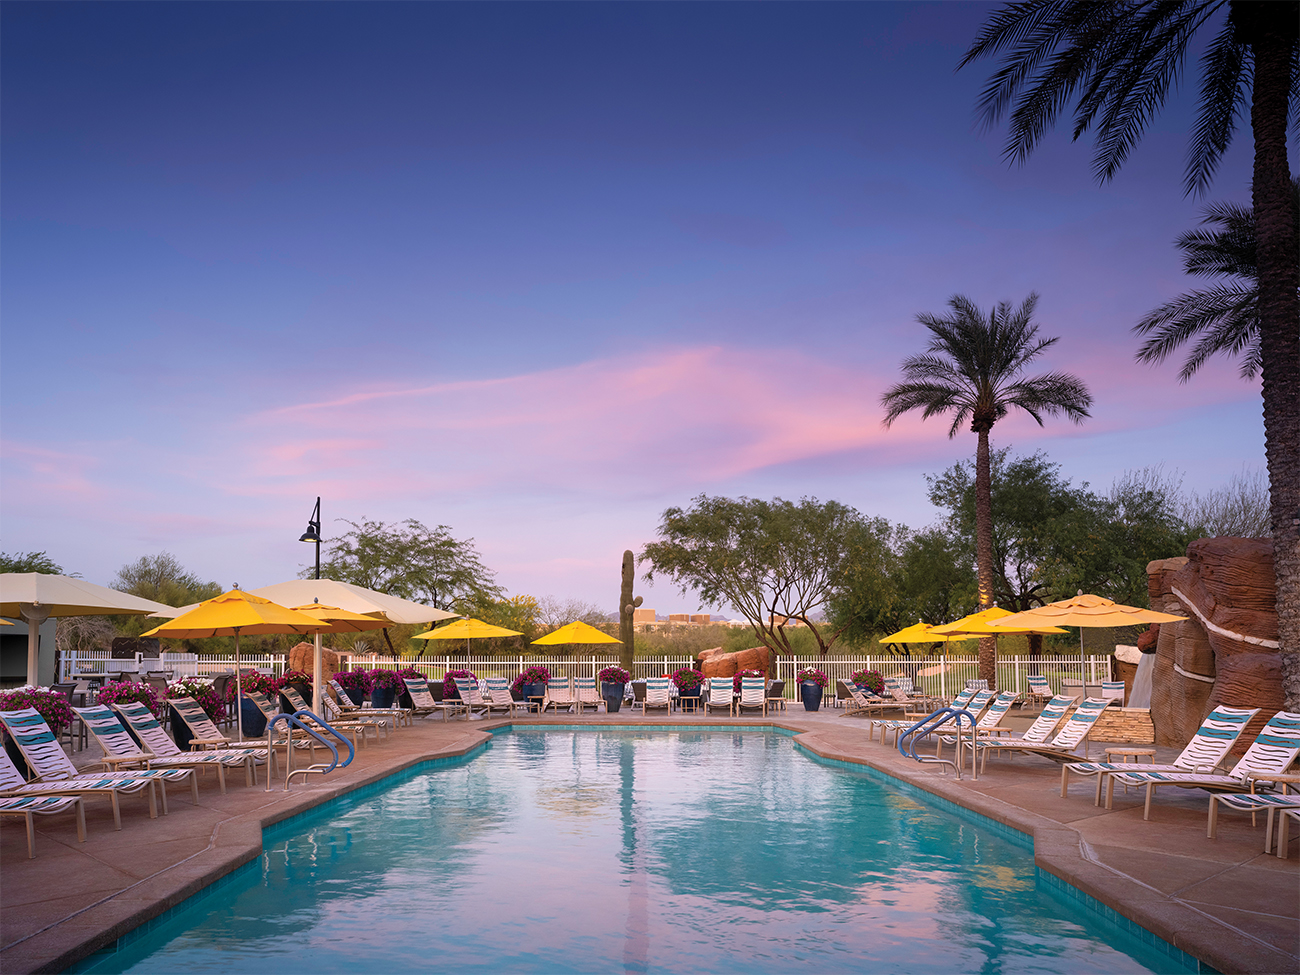 Marriott's Canyon Villas Lap Pool. Marriott's Canyon Villas is located in Phoenix, Arizona United States.